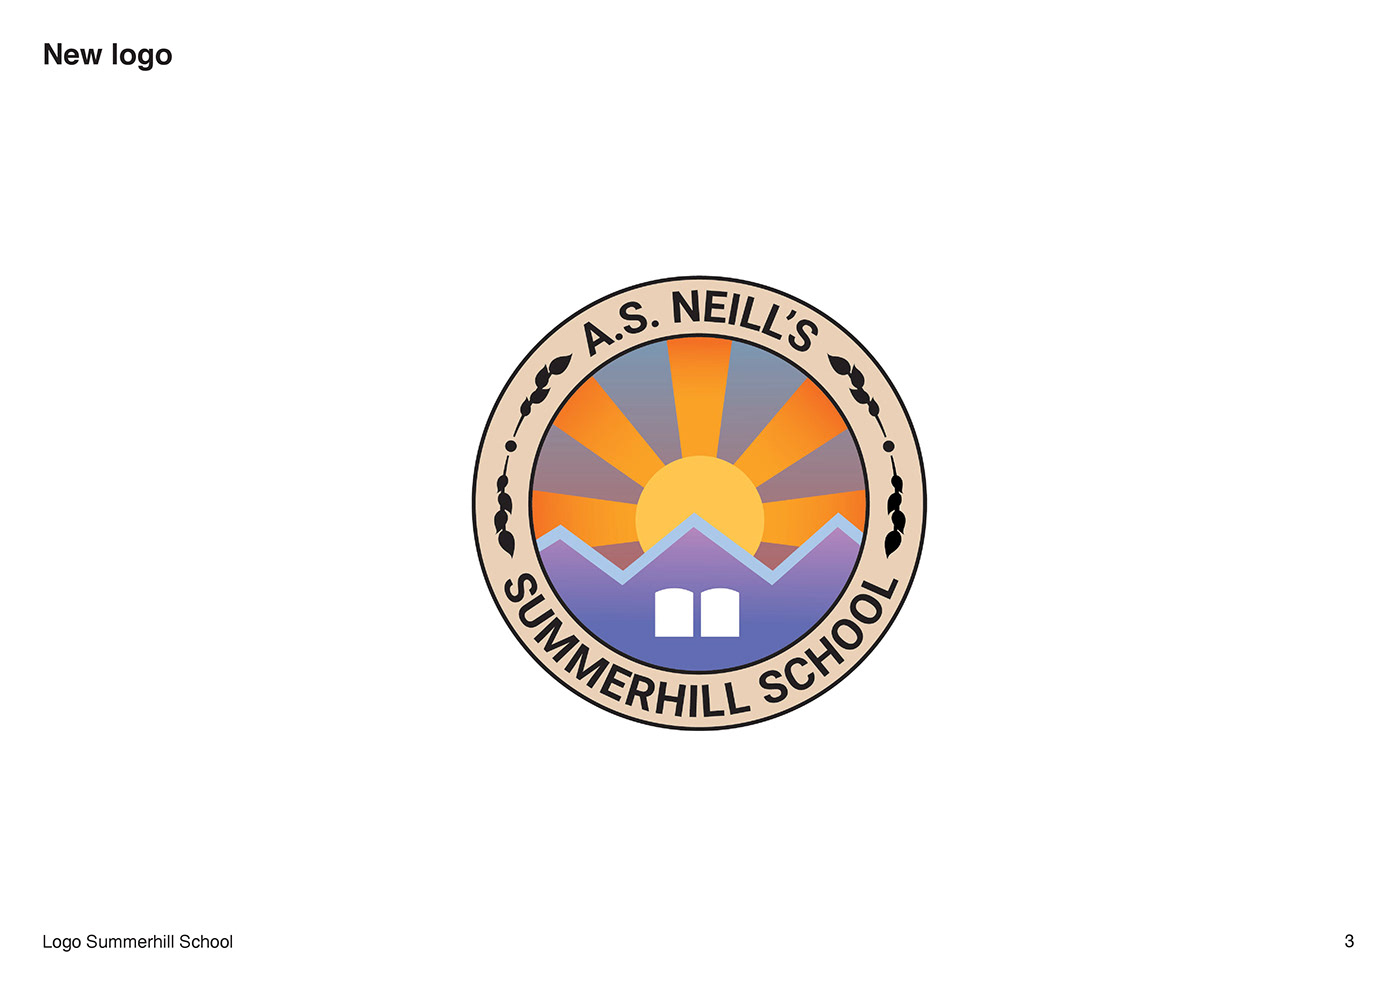 A.S Neill's Summerhill School (english democratic school) new logotype.